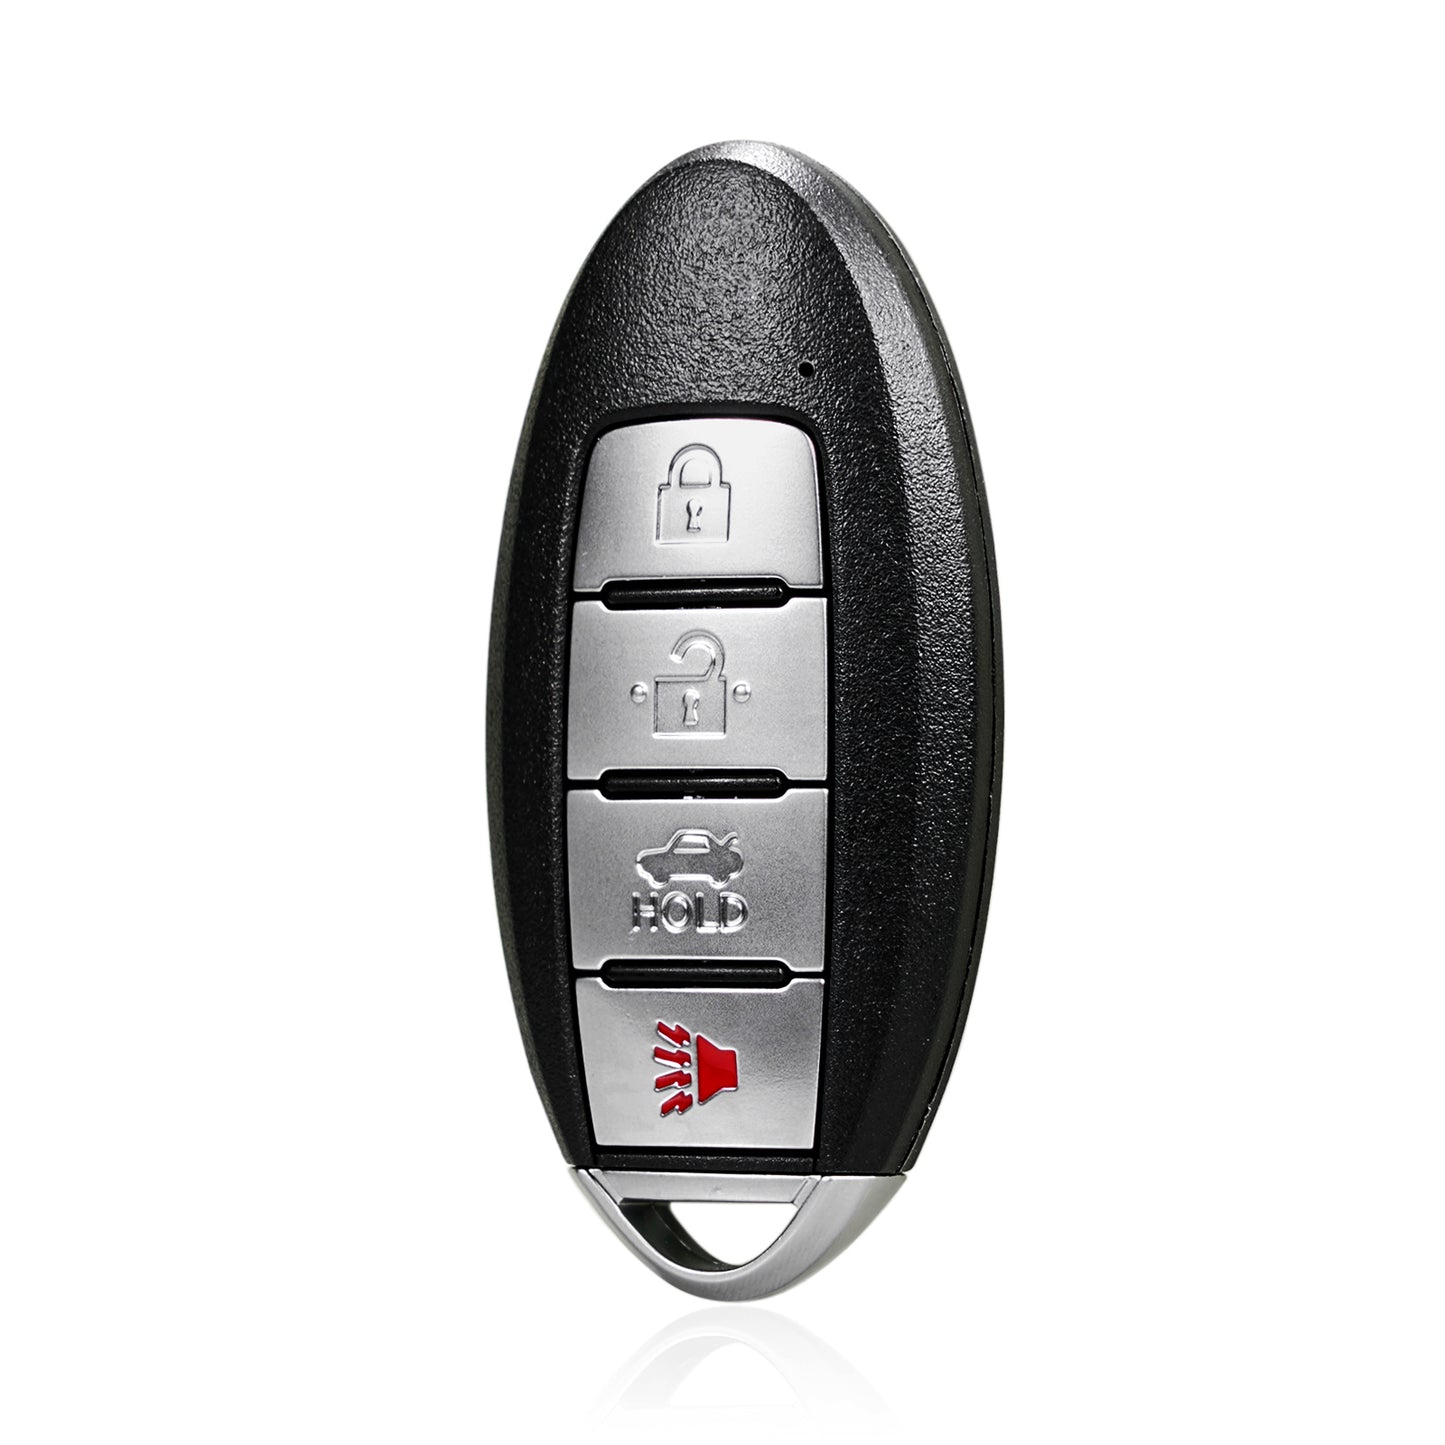 4 Buttons 434MHz Fob Entry Car Remote Key For 2019-2020 Nissan Altima Sentra Versa Infiniti QX50 FCC ID : KR5TXN1 SKU : H698